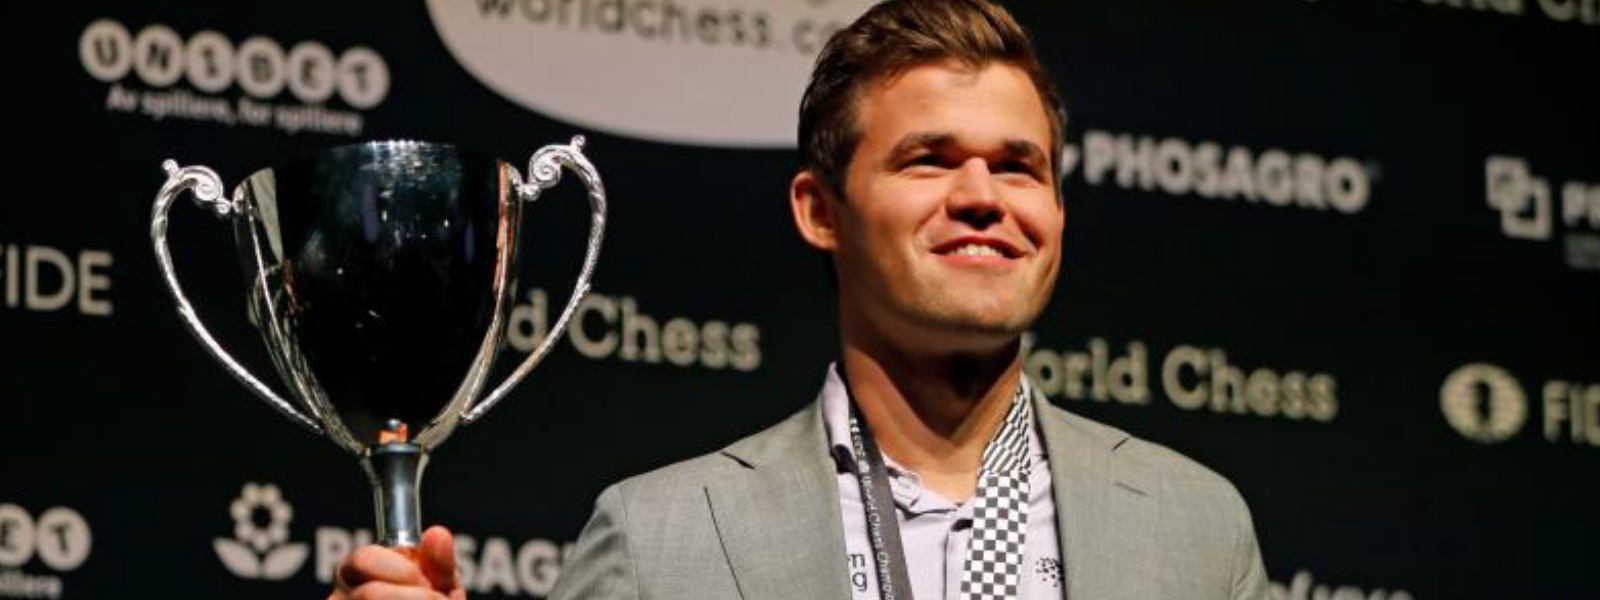 Norway's Carlsen wins World Chess Championship